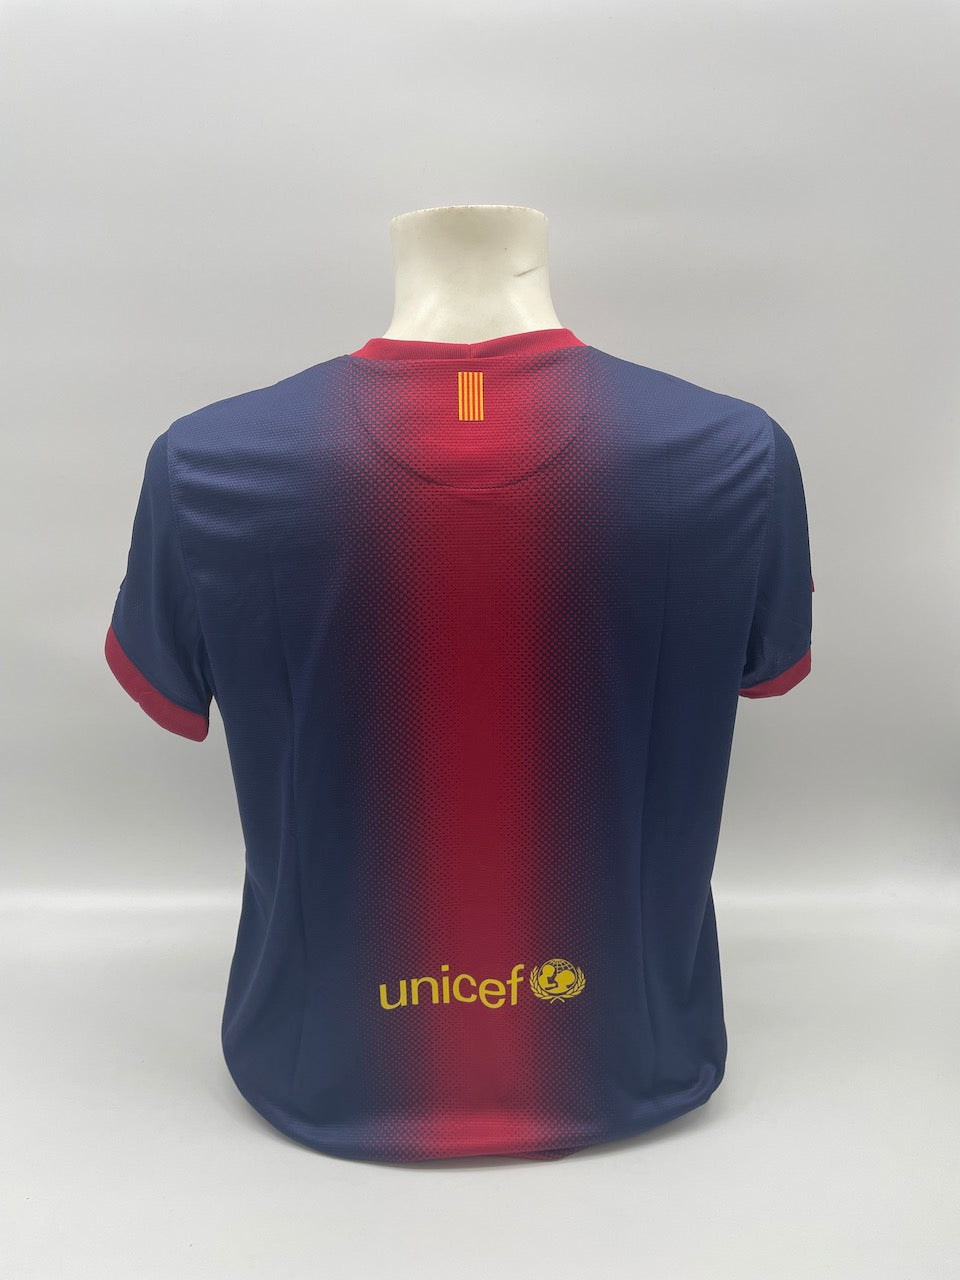 FC Barcelona Trikot Johan Cruyff signiert Autogramm Nike Niederlande Holland 158-170